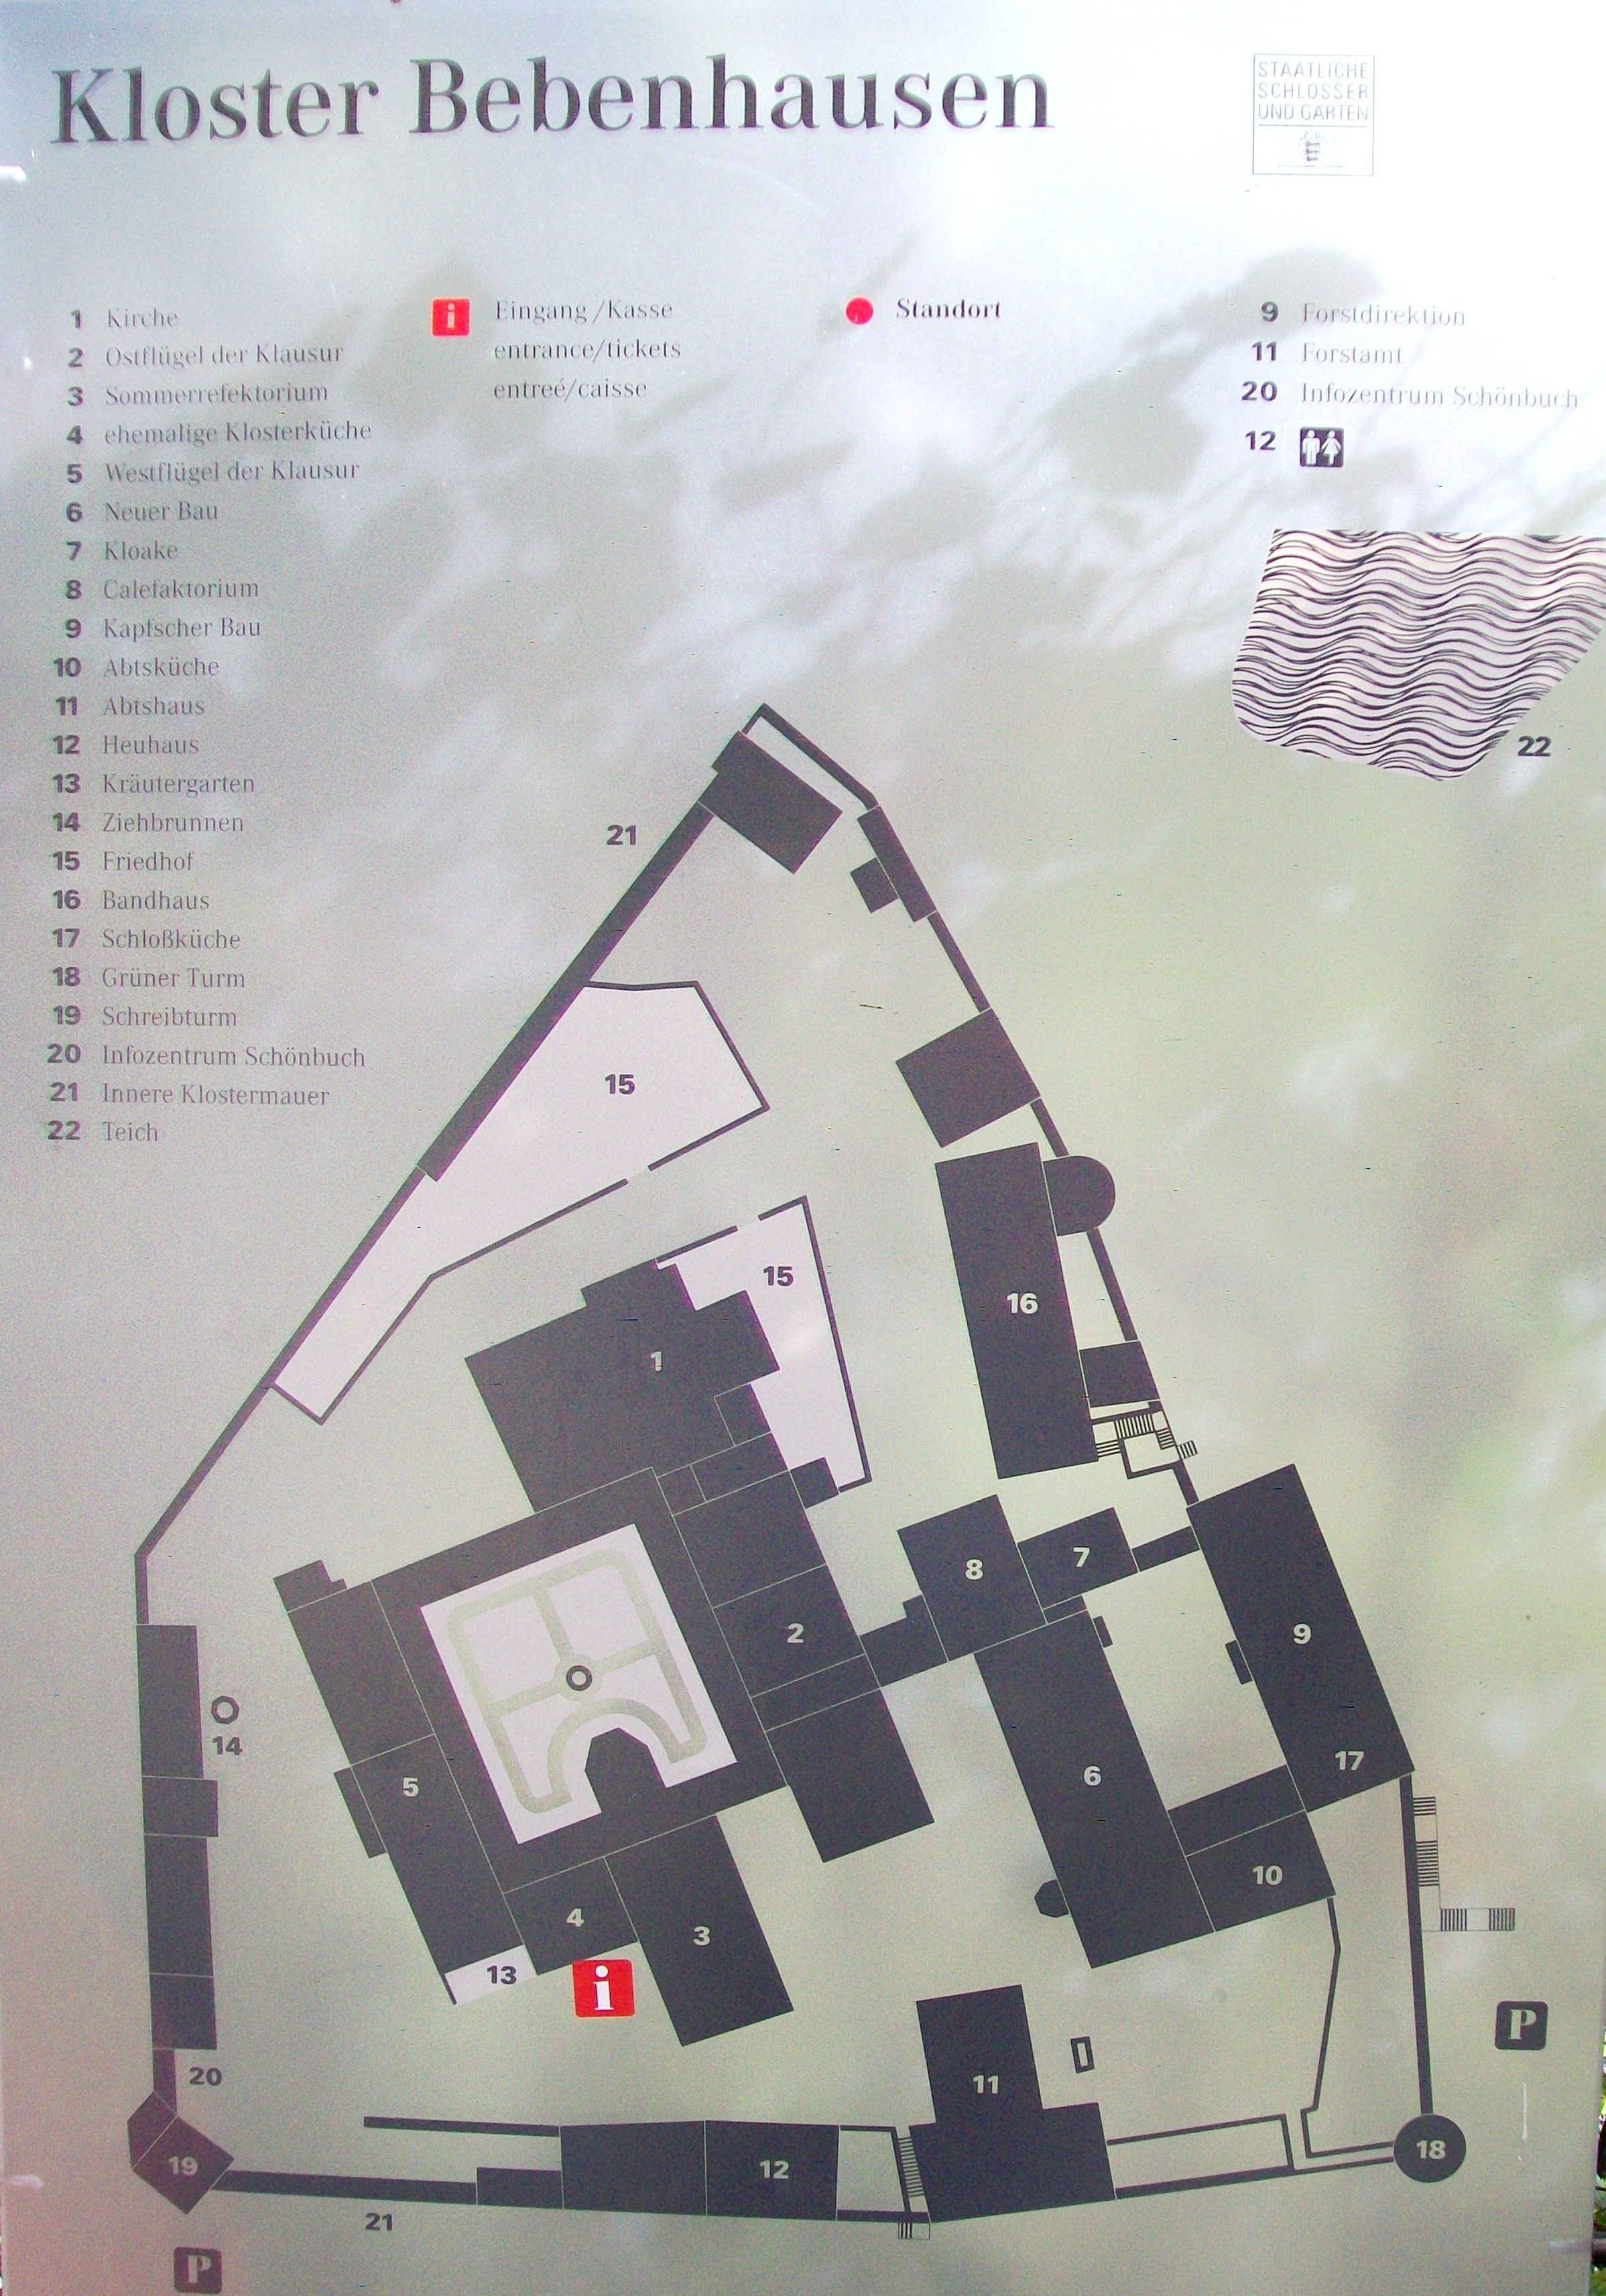 Bebenhausen Map and Key